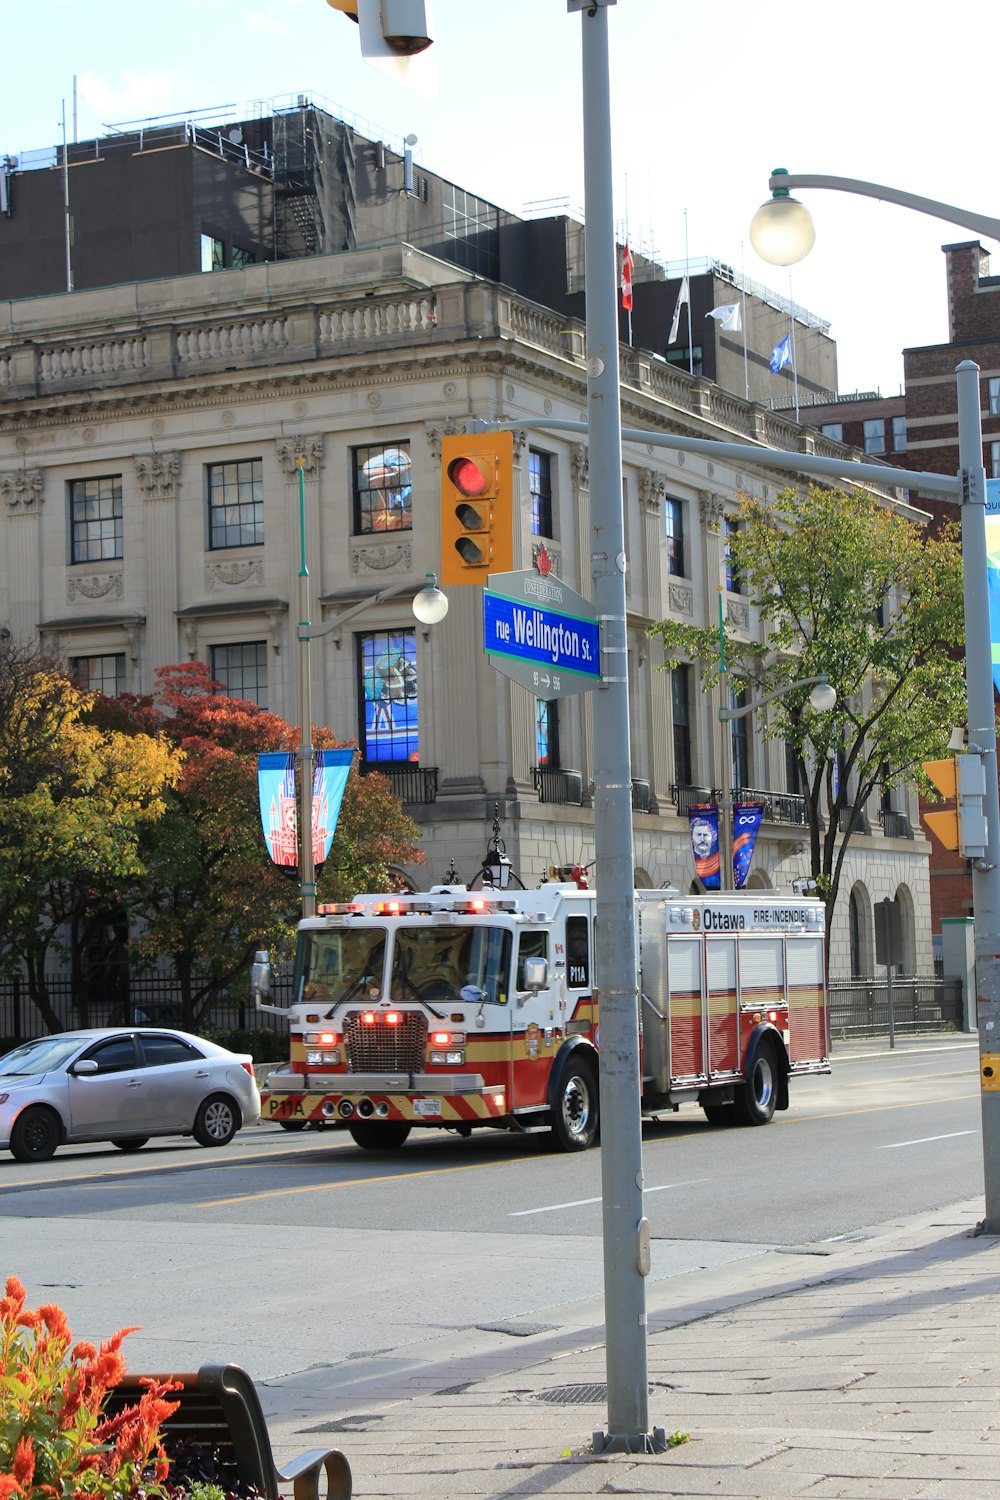 a fire truck driving down a street next to a tall building